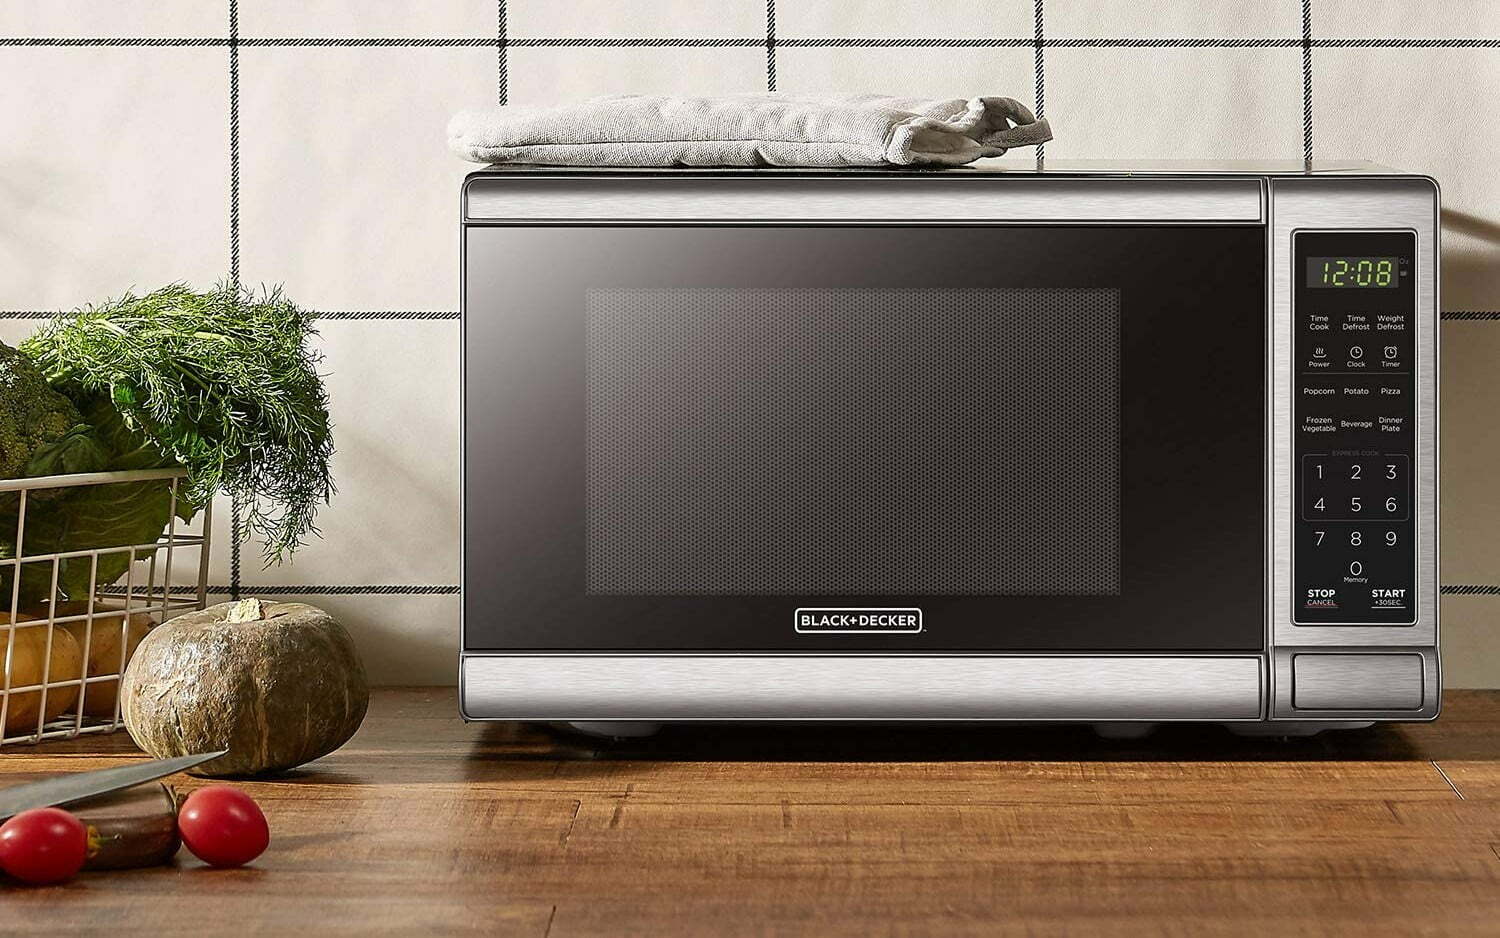 https://www.gadgetreview.com/wp-content/uploads/countertop-vs-built-in-microwave.jpg